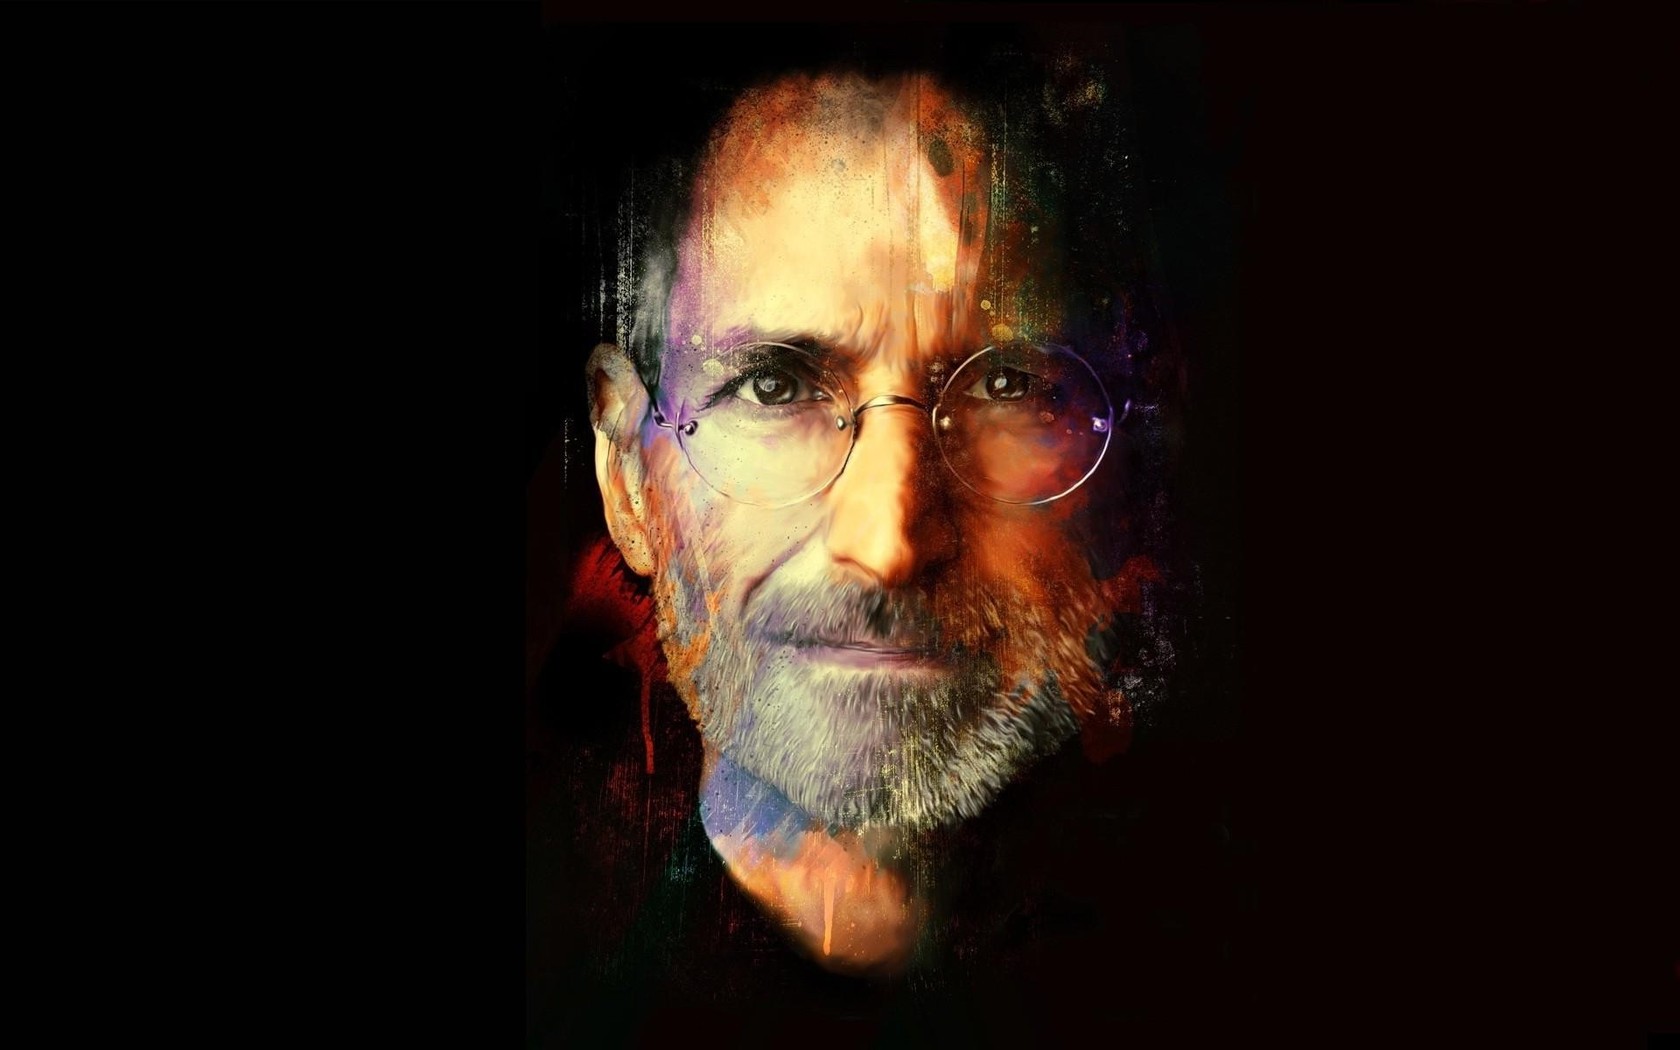 Painting Steve Jobs Wallpaper HD Image Stock Photos